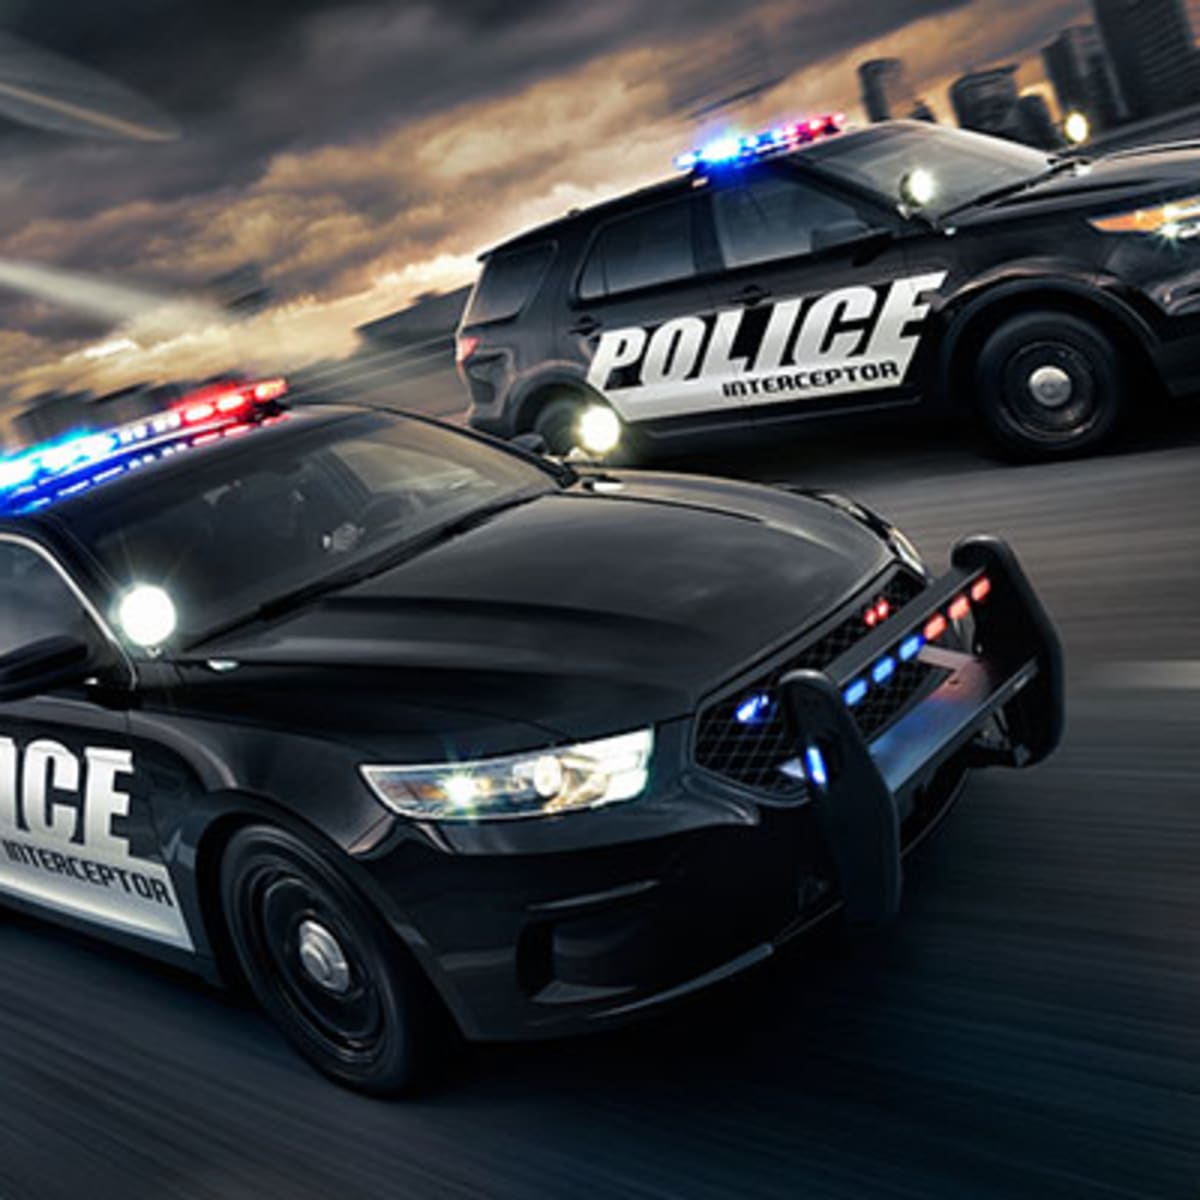 Policeman speed. Ford Taurus Police Interceptor. Ford Police Interceptor. BMW m4 Police Interceptor. Ford Police Interceptor 2014.